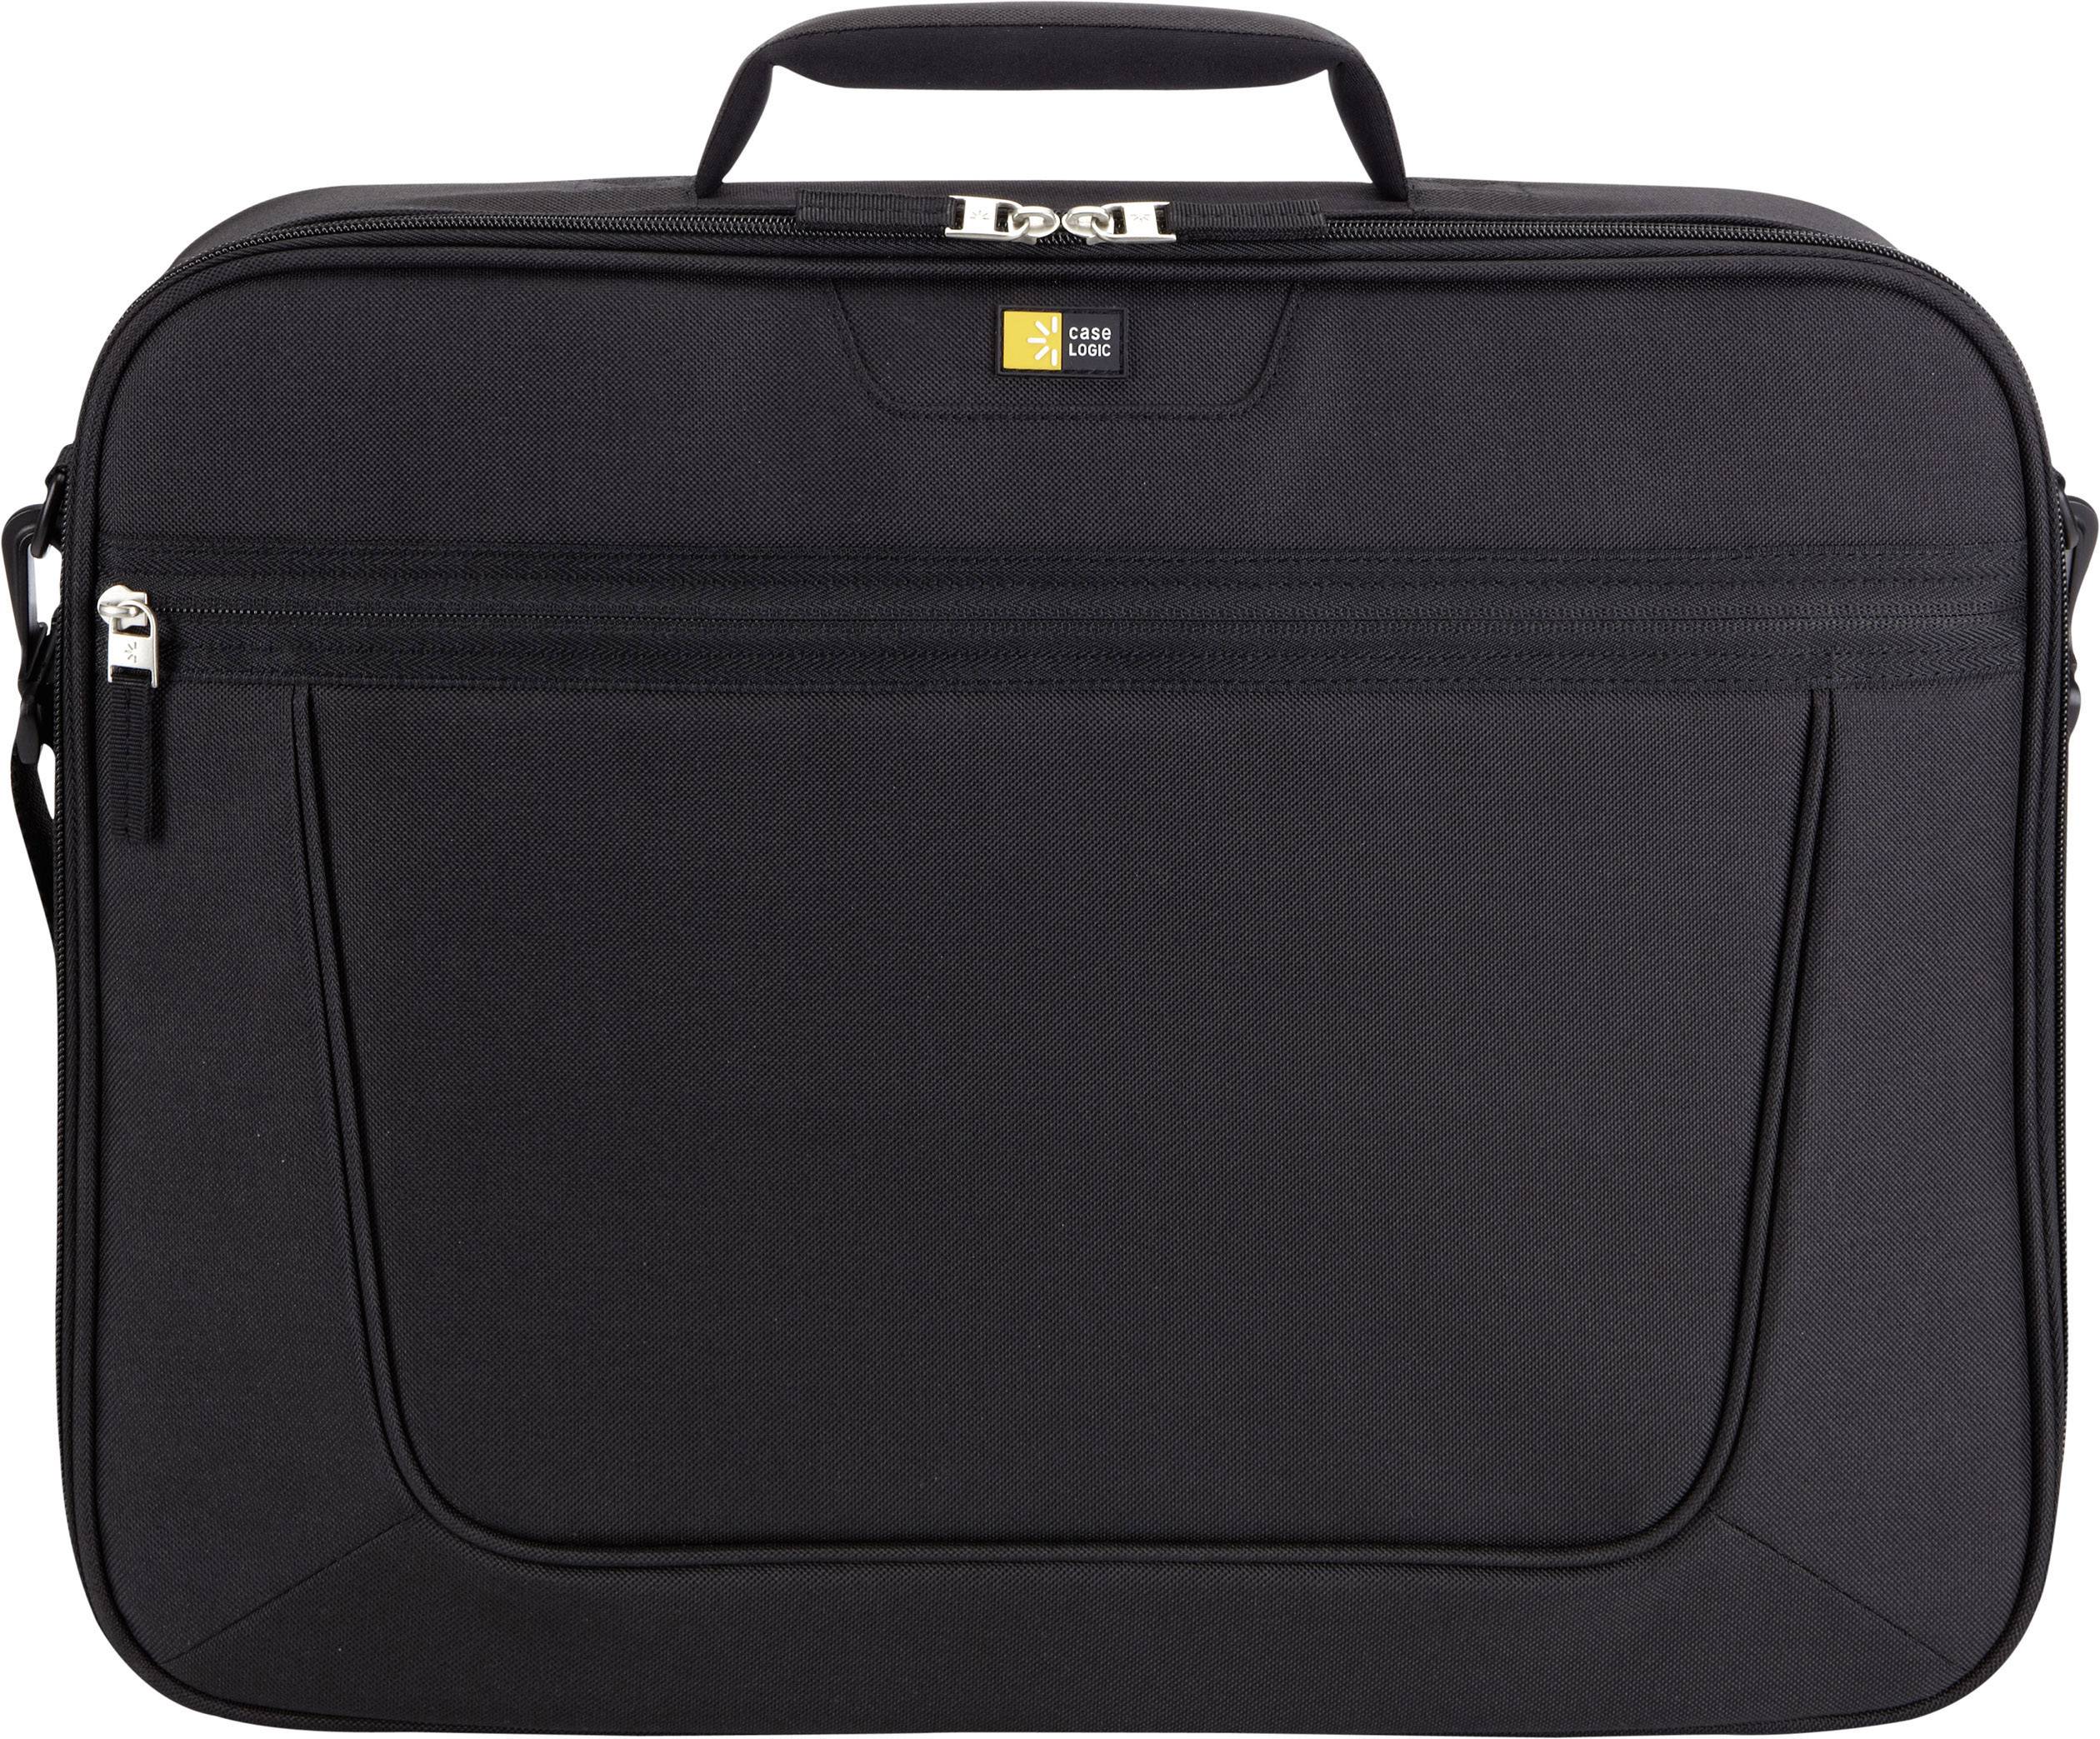 Logic Case Laptop Bag Deals Discounted, Save 64% | jlcatj.gob.mx